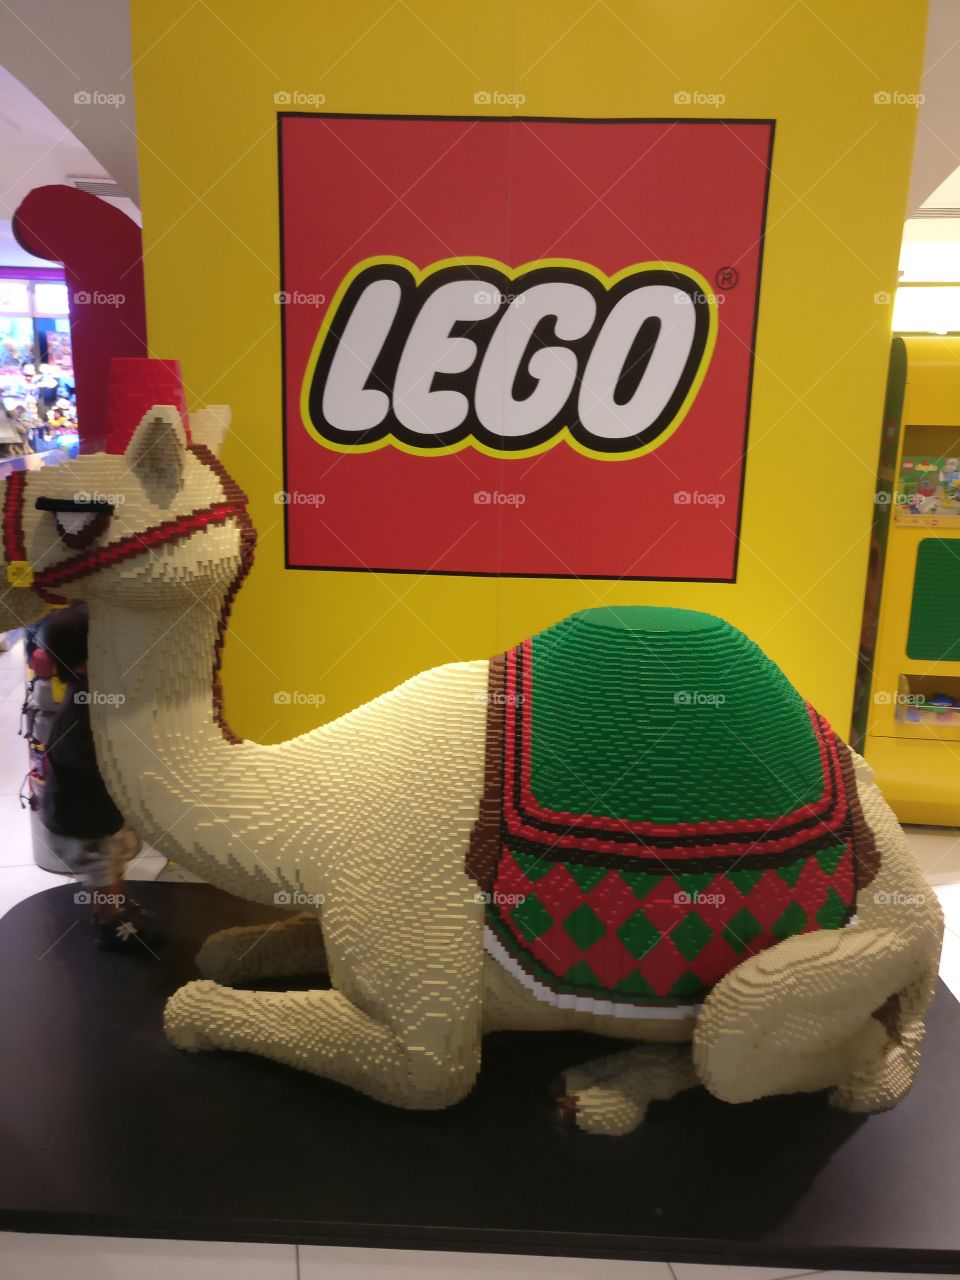 Lego camel at Abu Dhabi airport